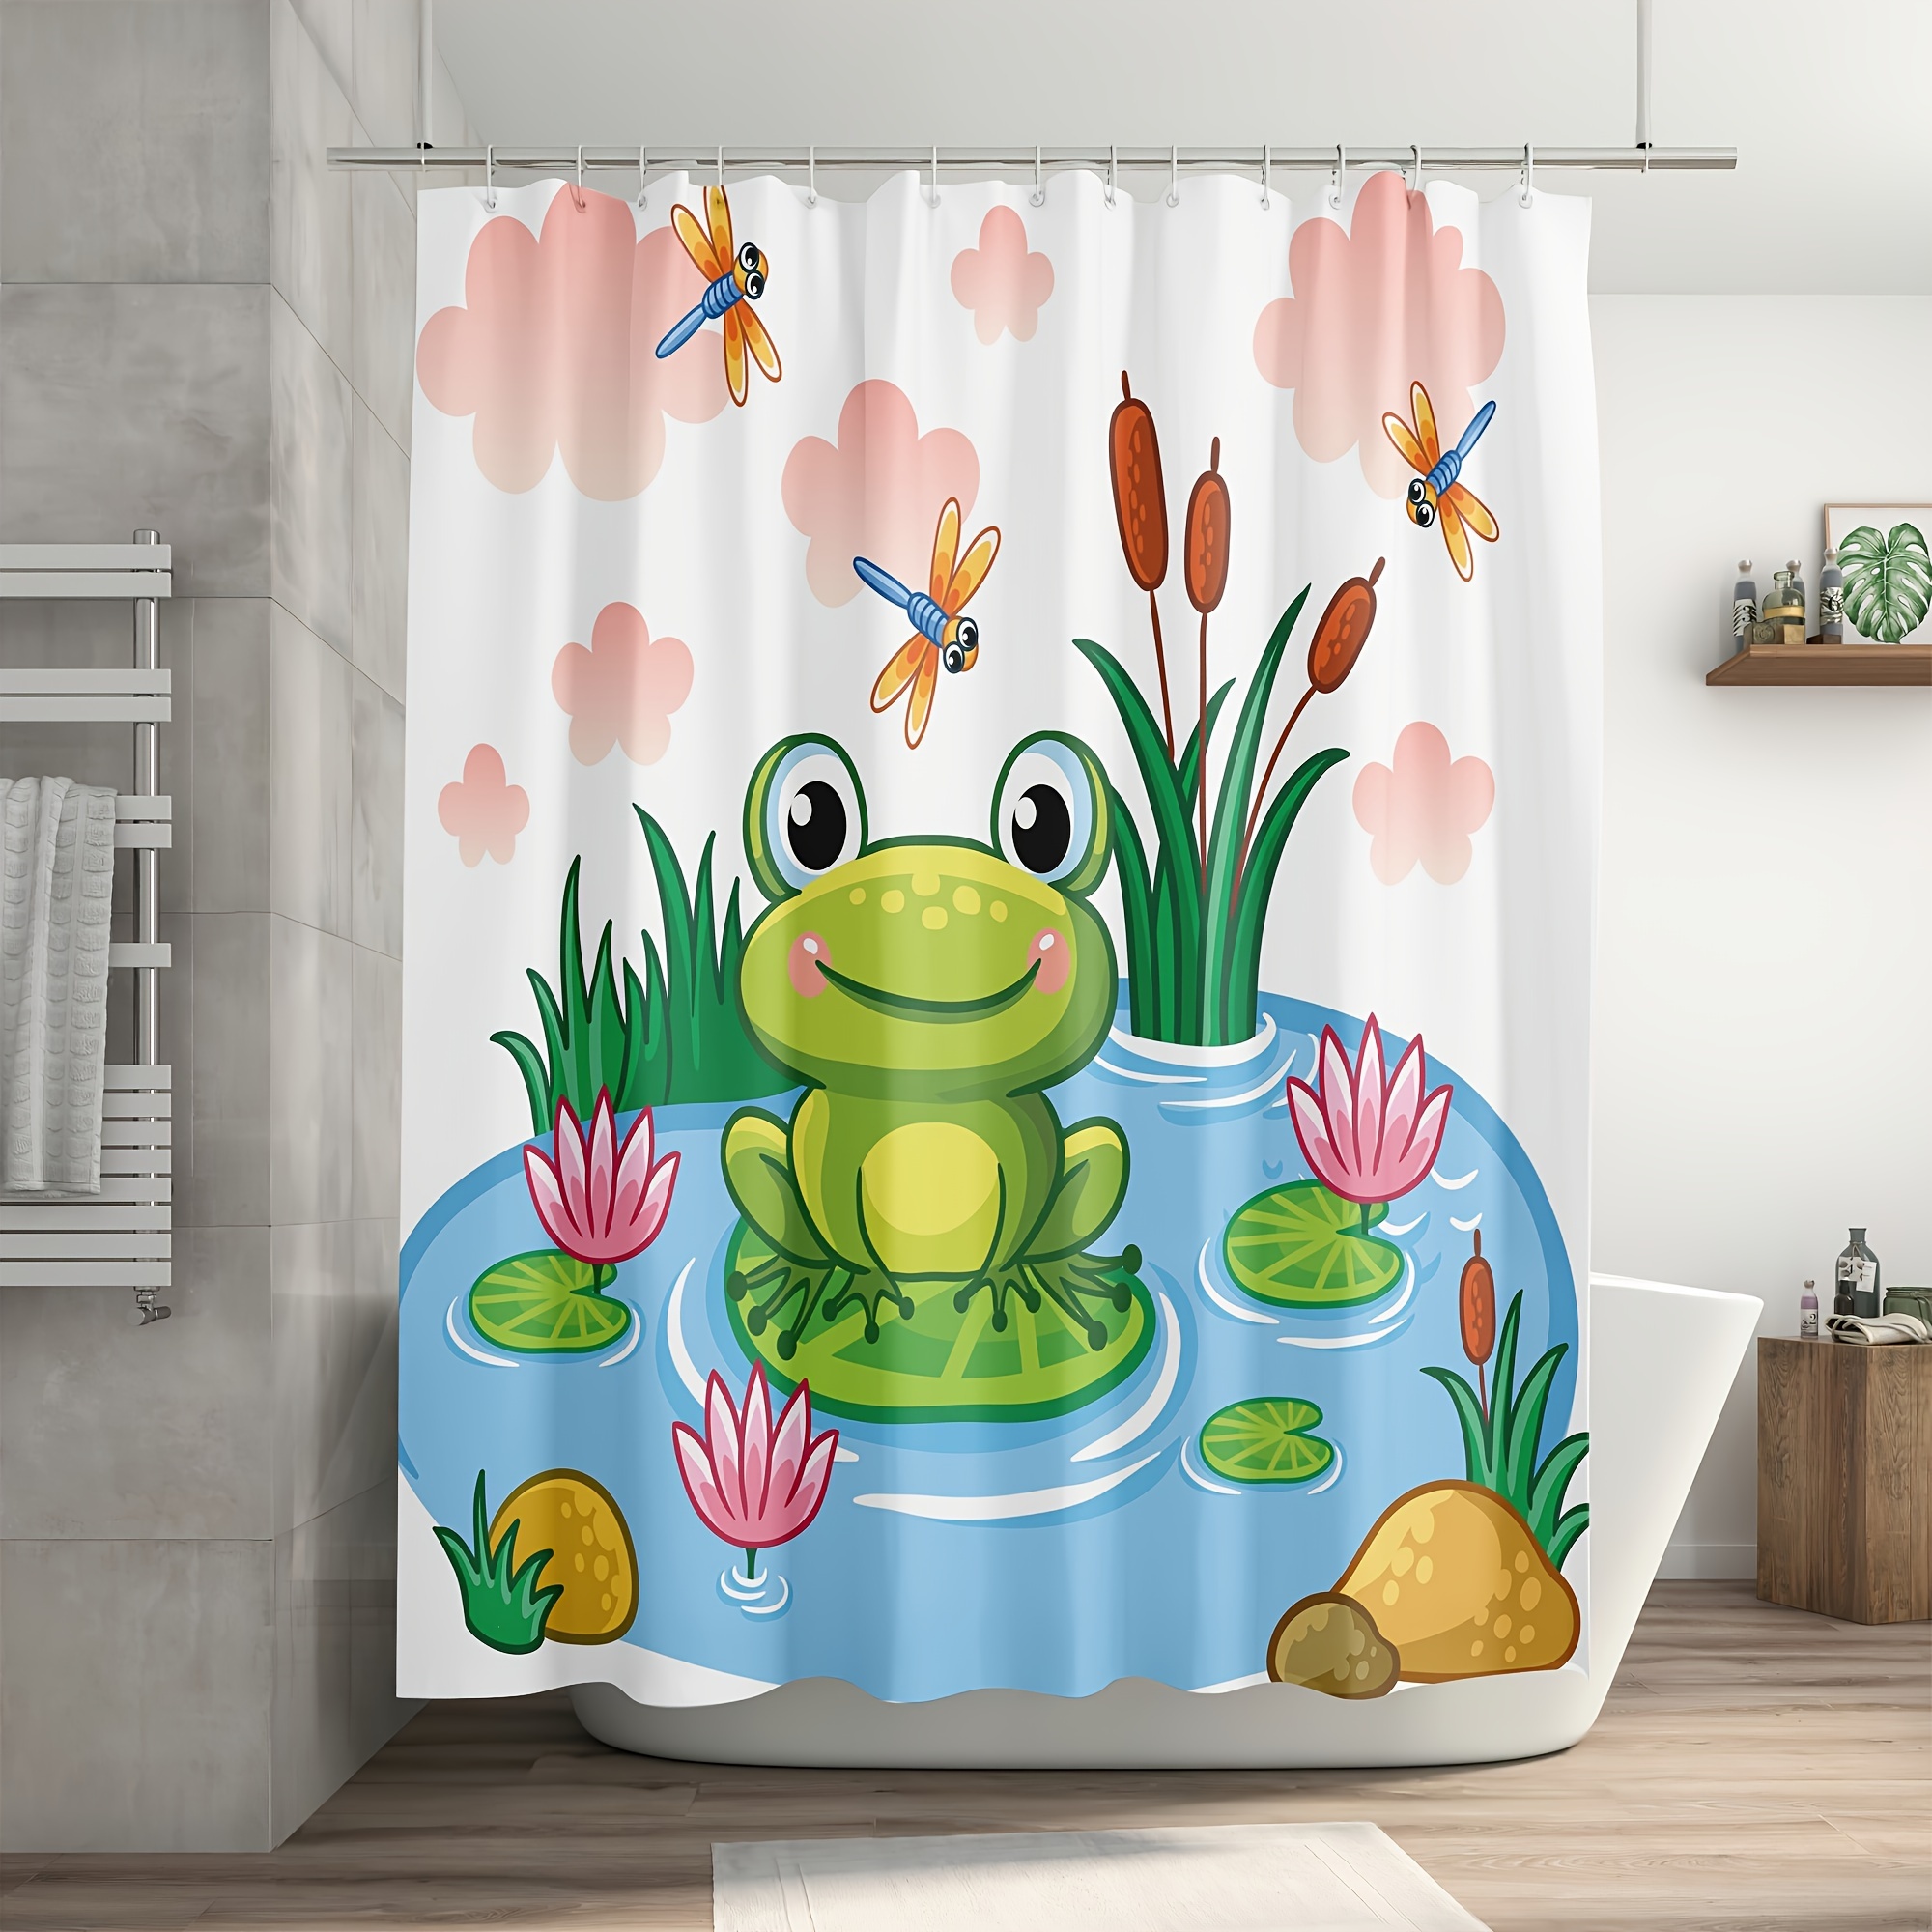 12pcs Bathroom Shower Curtain Hooks, Green Animal Frog Design